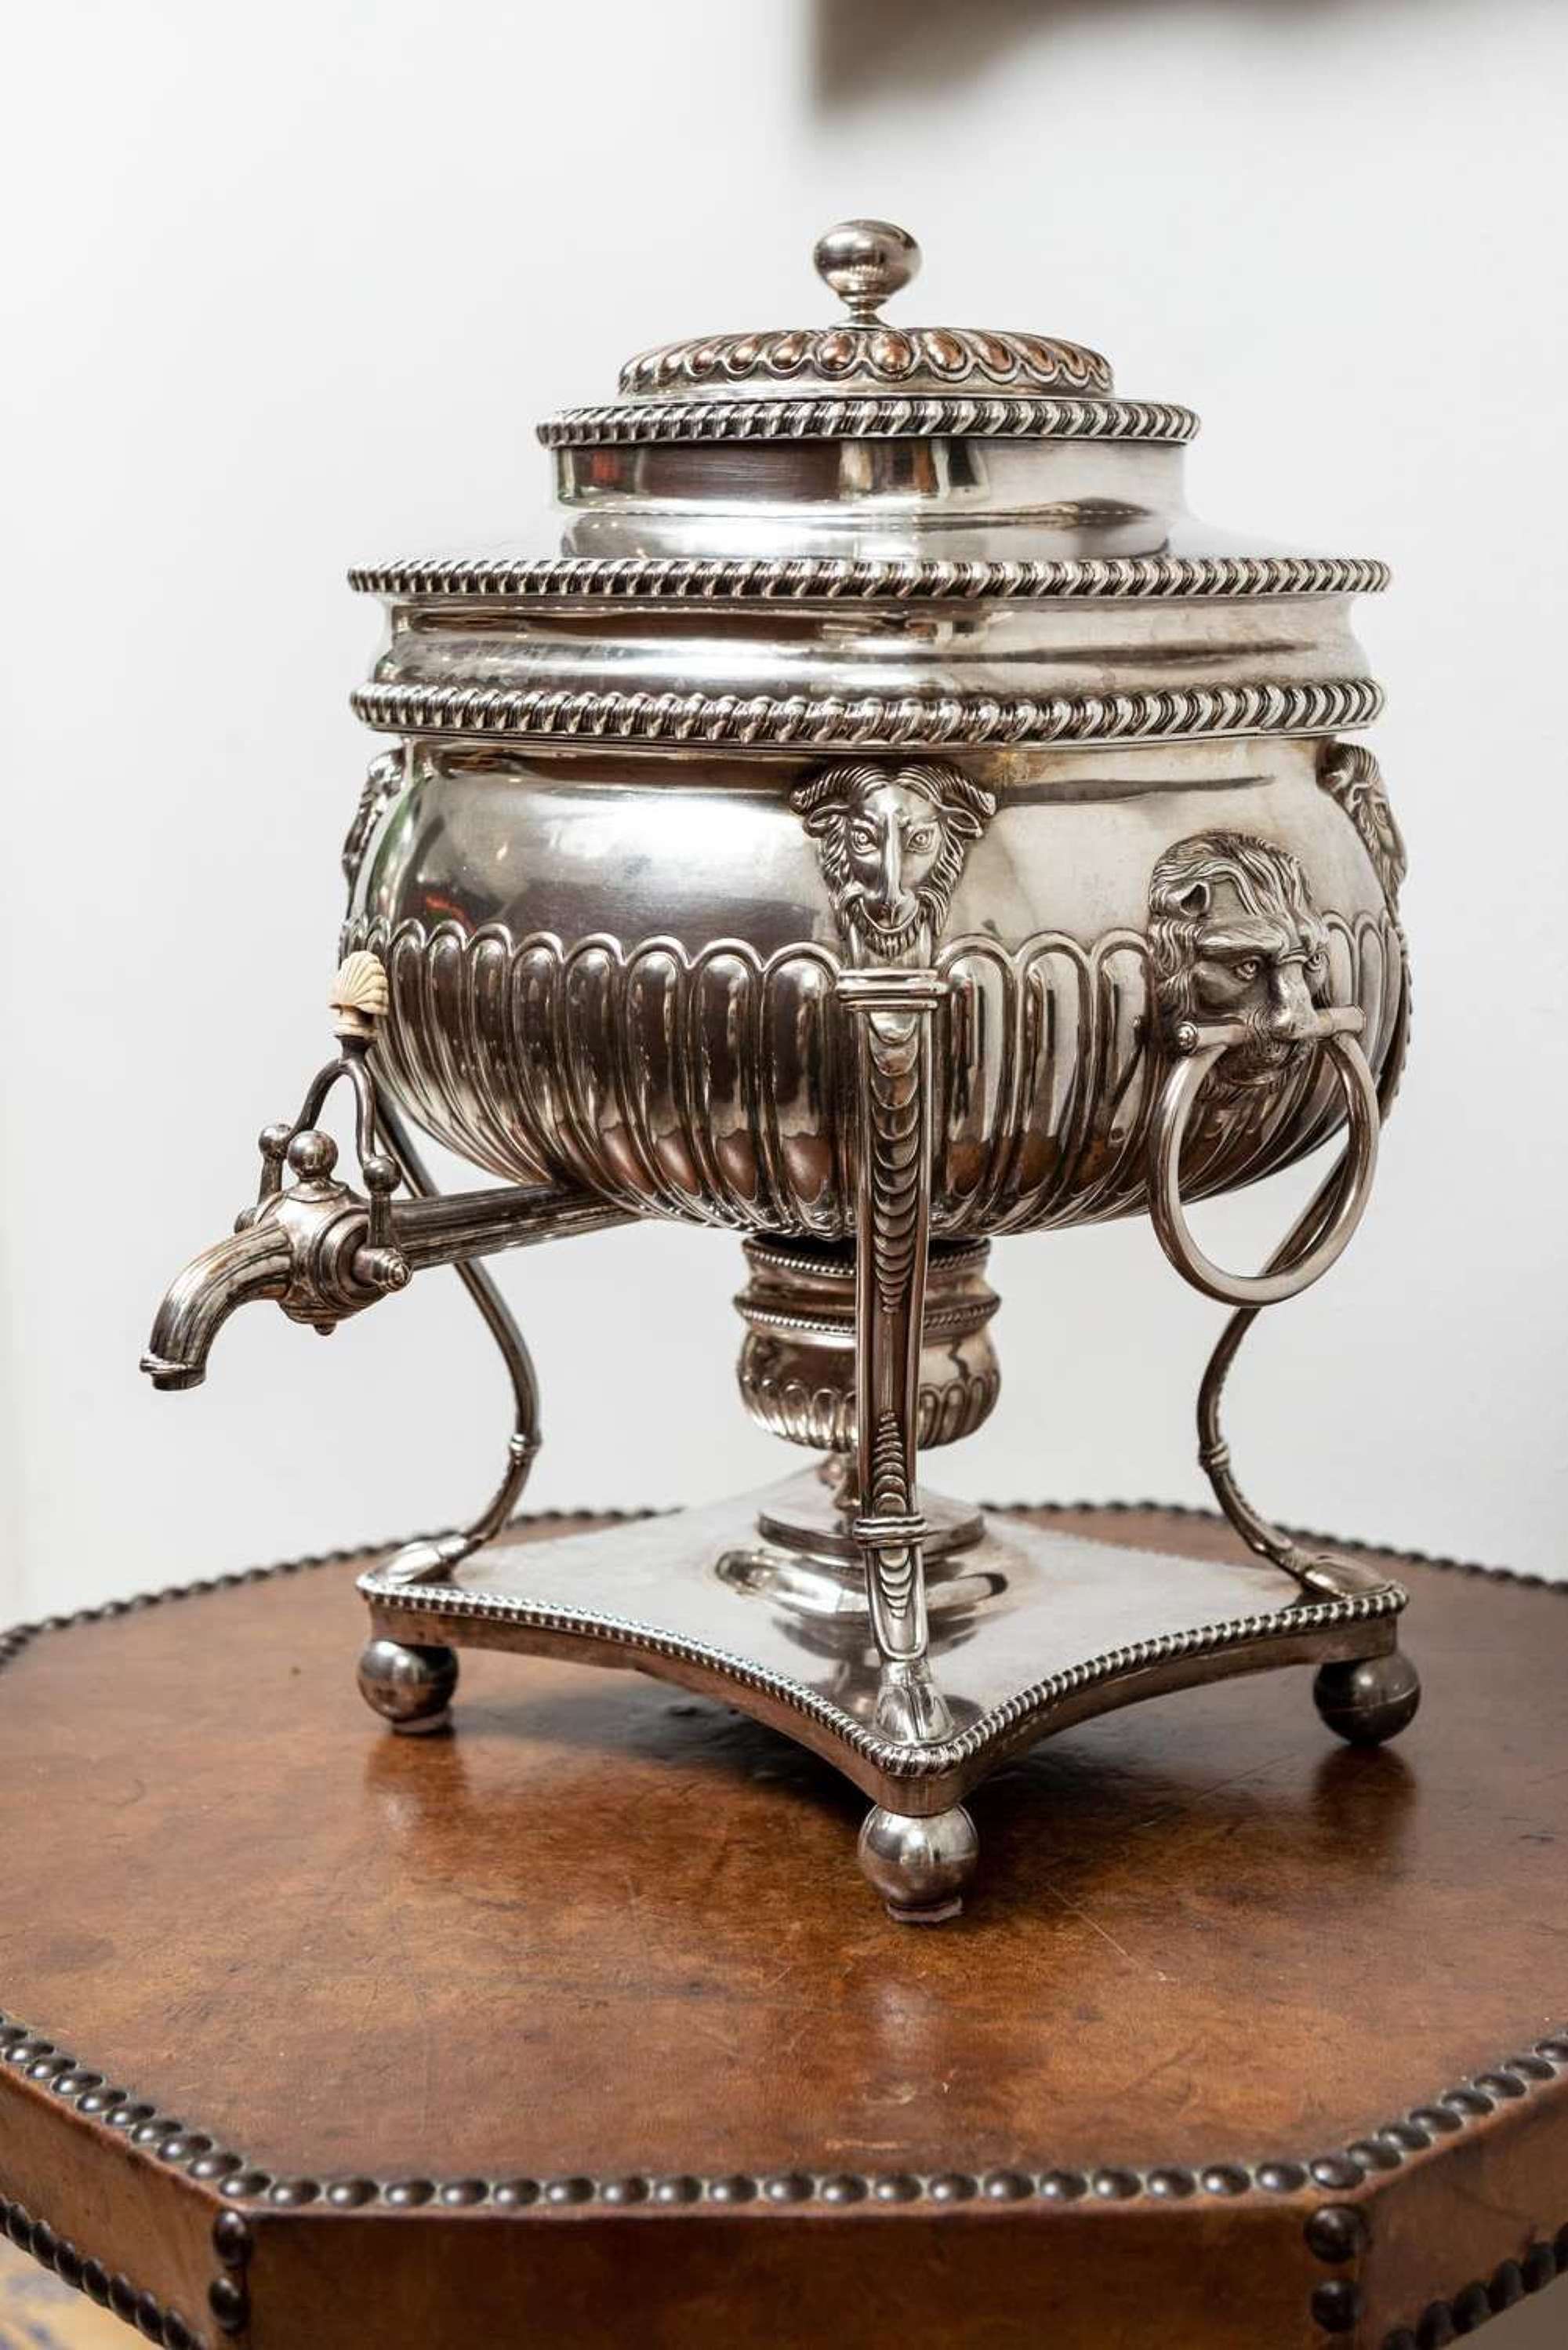 Circa 1800 sheffield plate tea urn